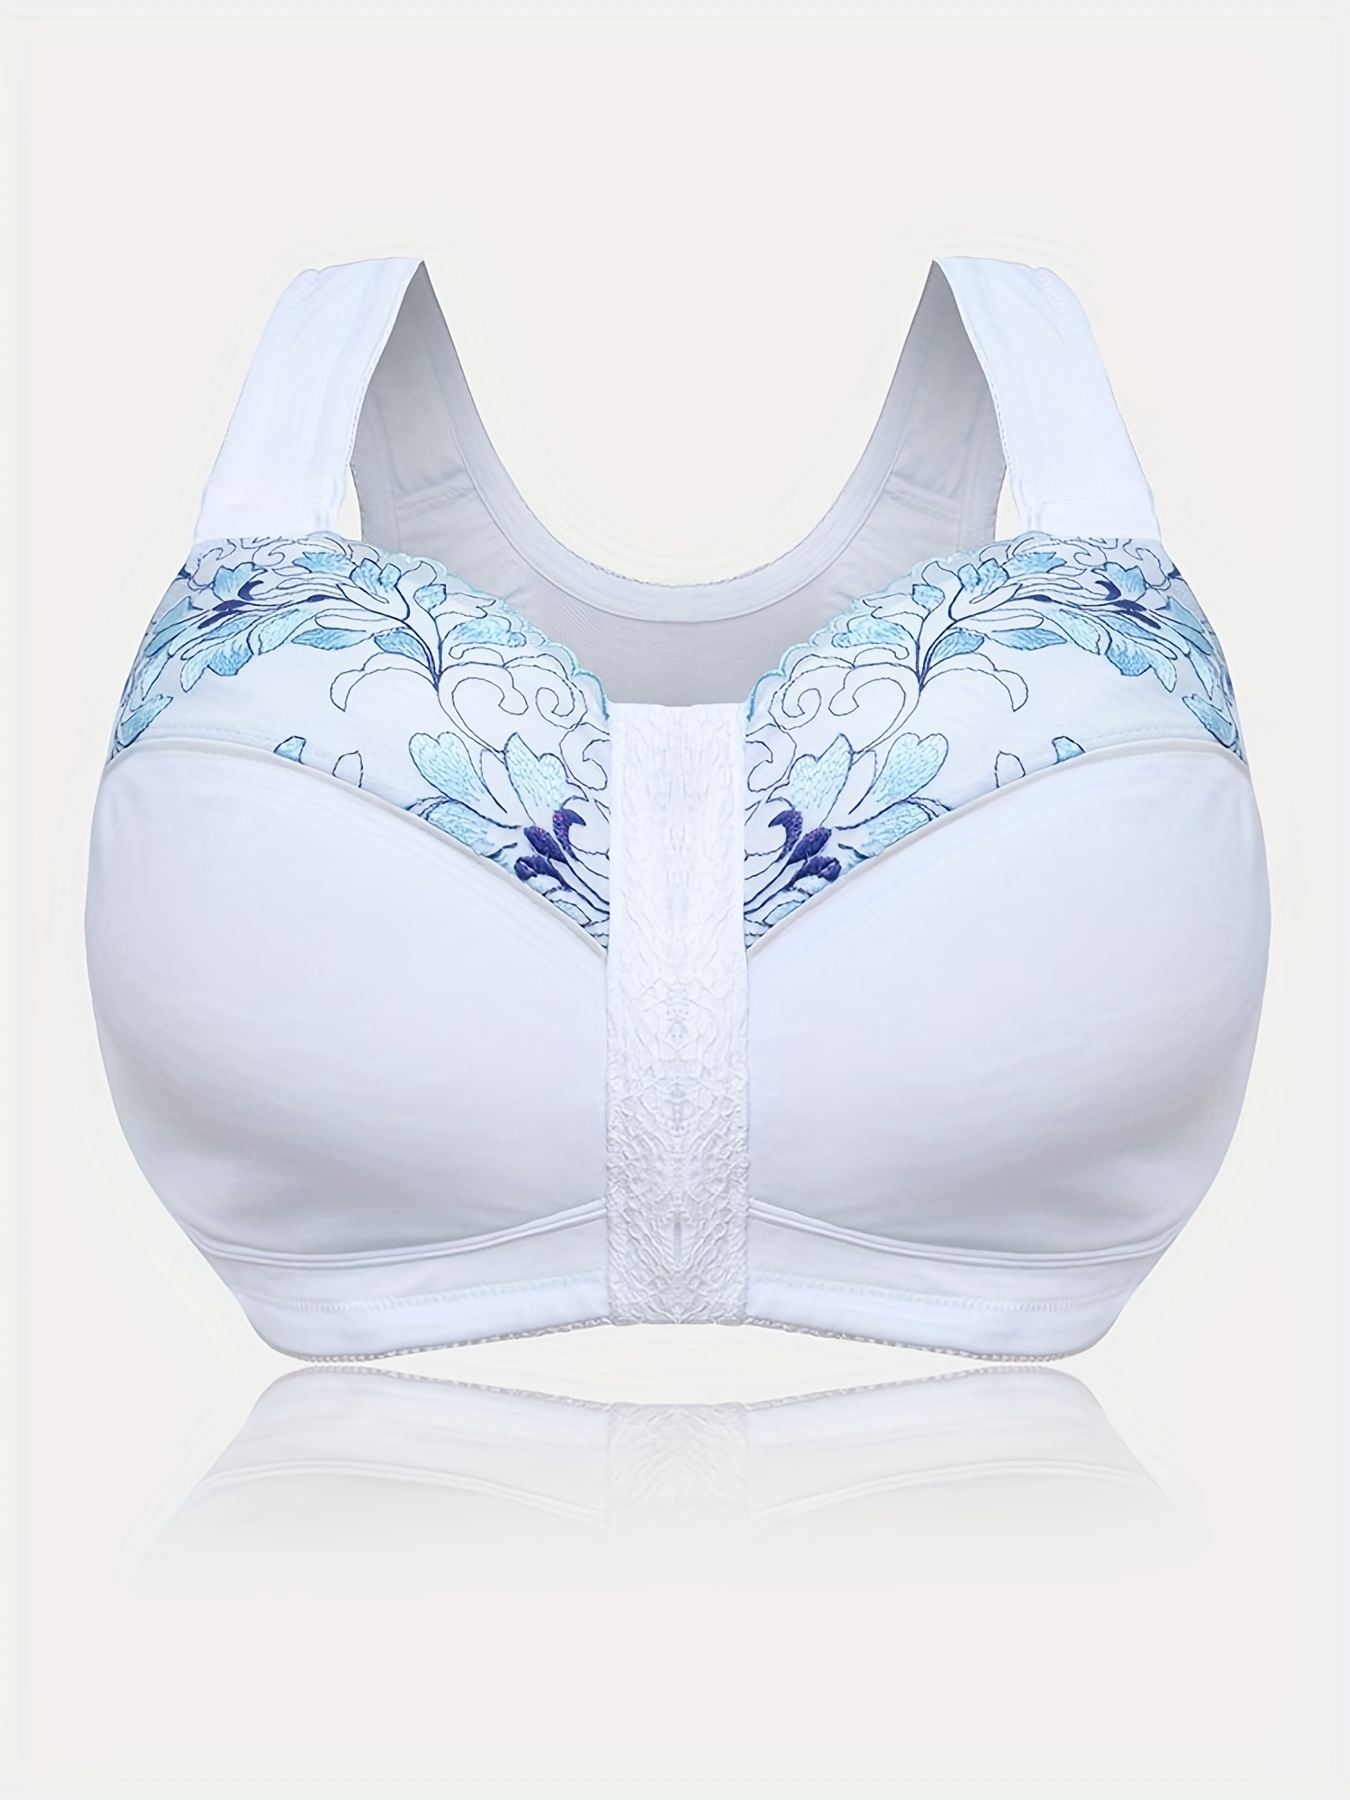 Tarmeek Women's Lace Floral Nursing Bras Wireless Plus Size Bra Full  Coverage Seamless Unlined Comfort 